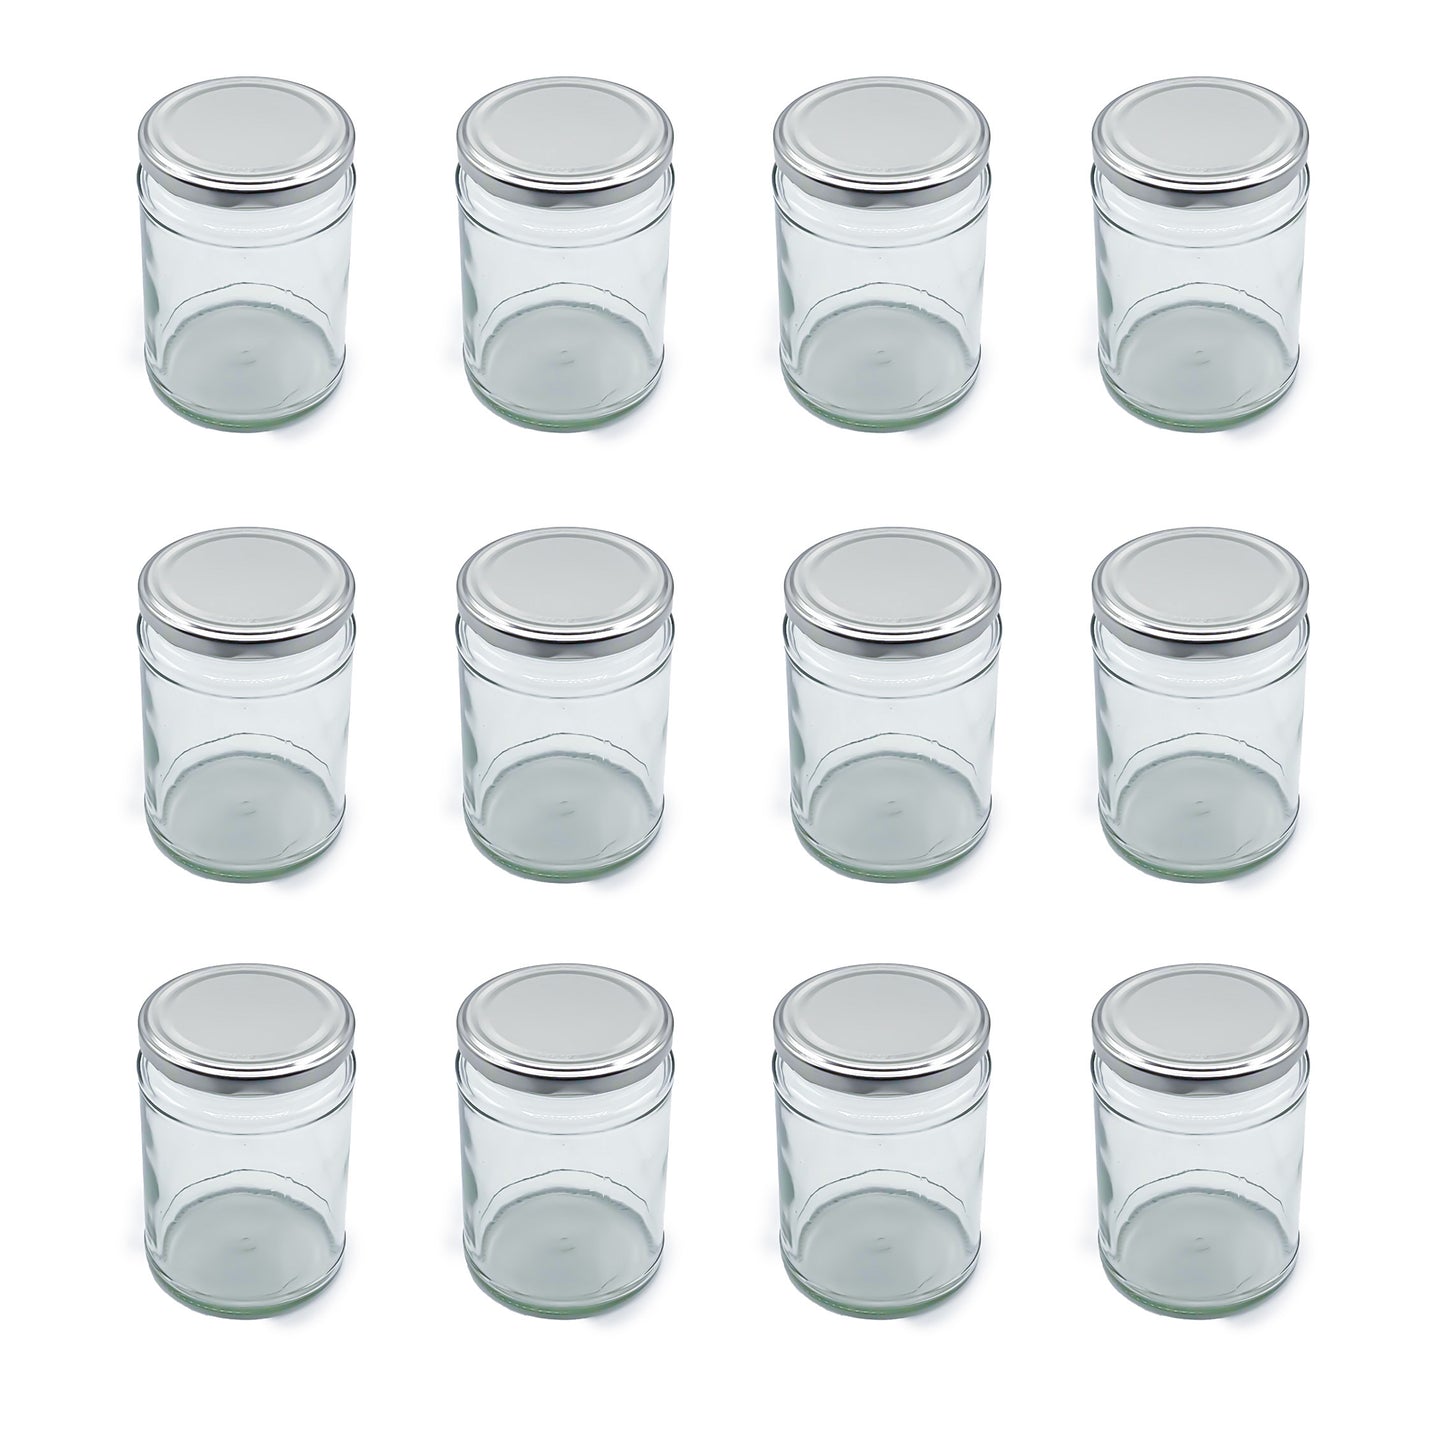 500ml Glass Jars Preserving Food Jars with Twist off Locking Silver Lids - 12 Pack